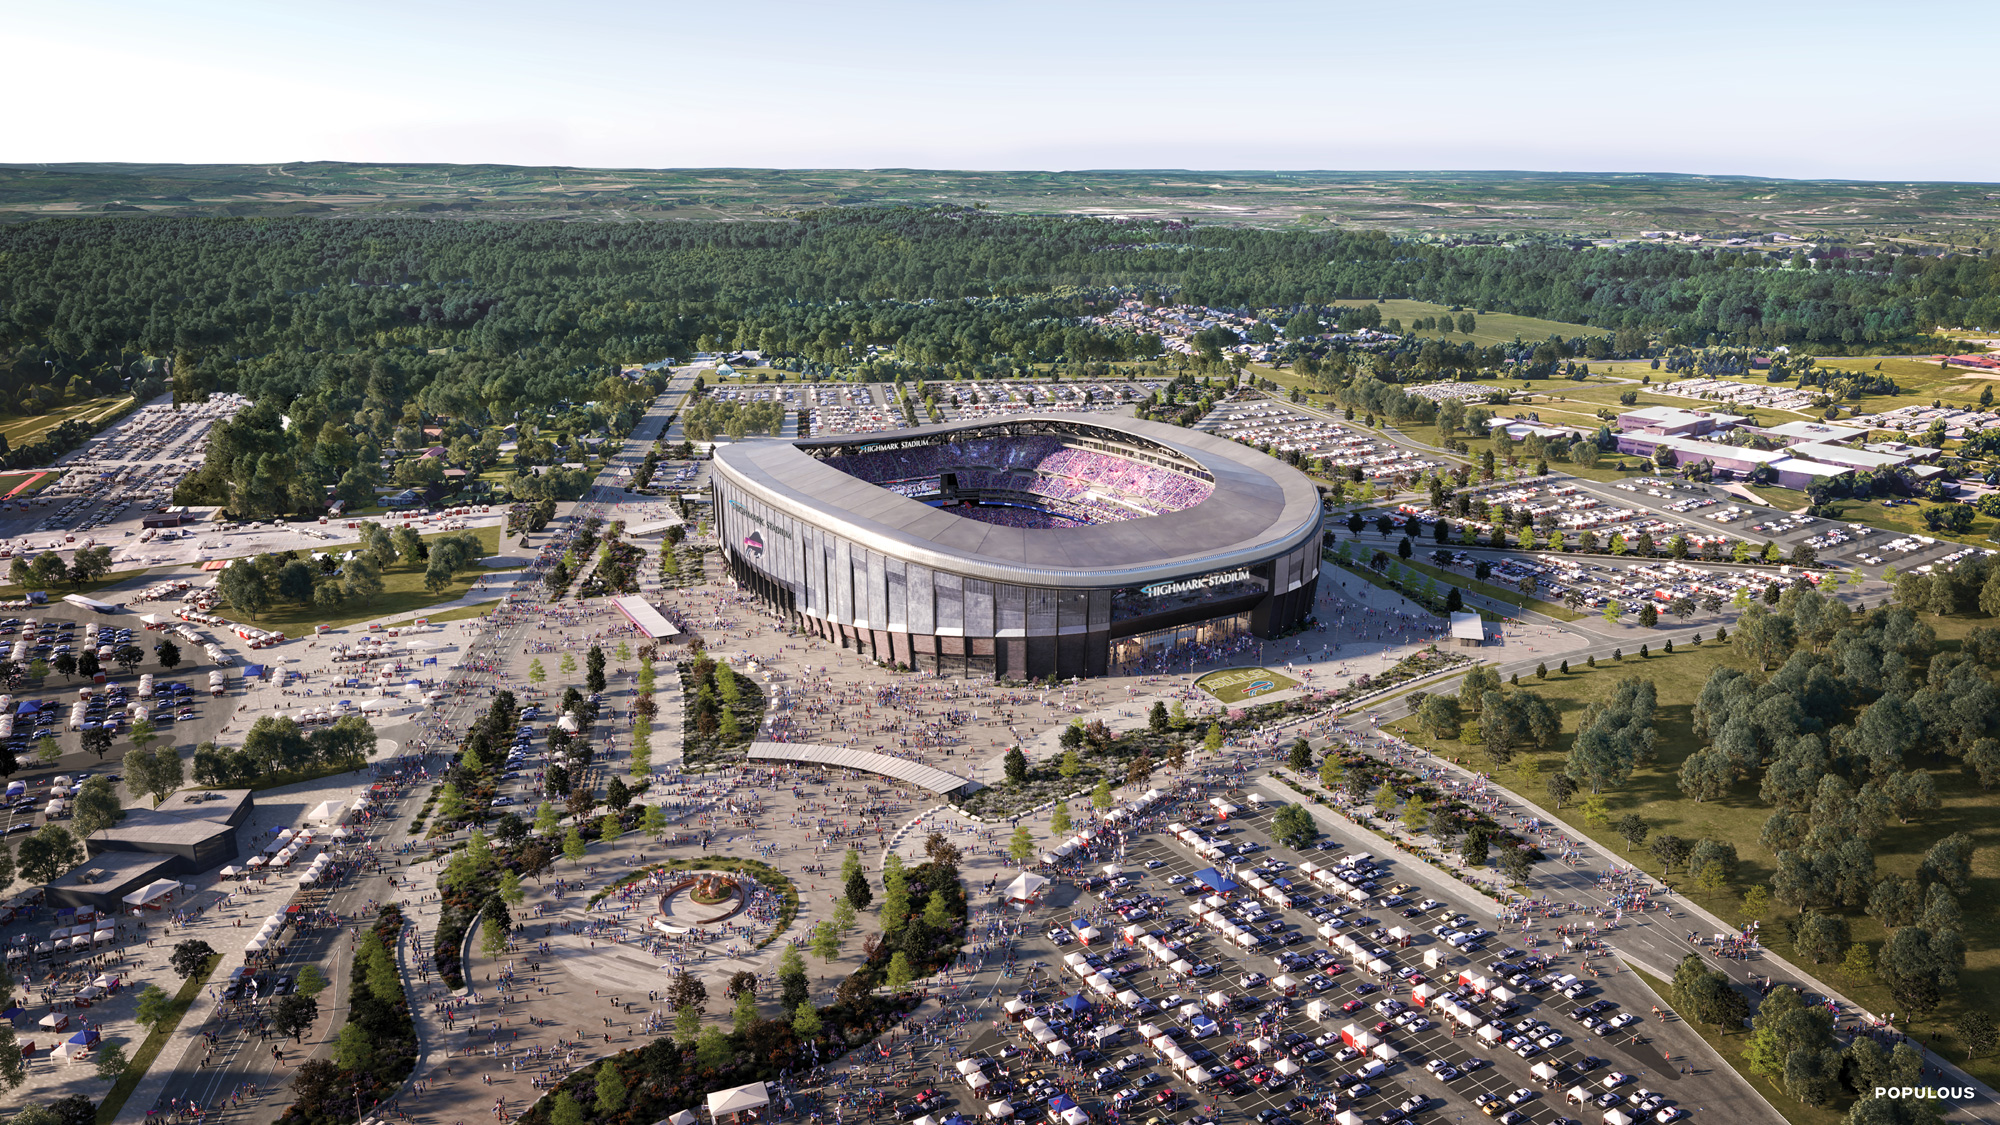 Groundbreaking Ceremony Held for New Buffalo Bills Stadium